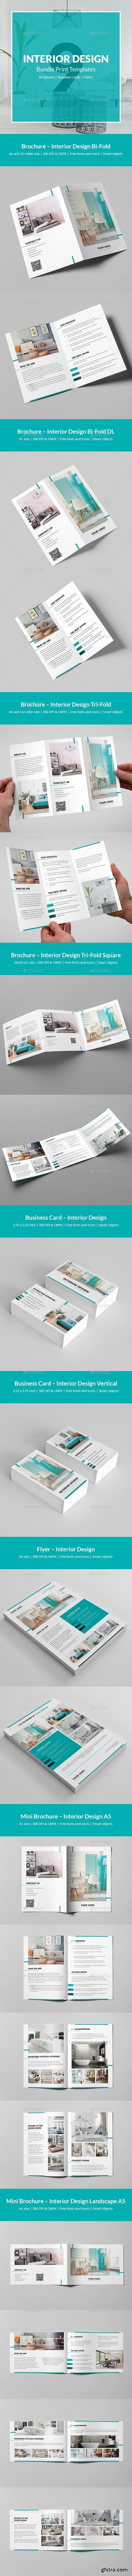 Graphicriver - Interior Design – Bundle Print Templates 9 in 1 21117172